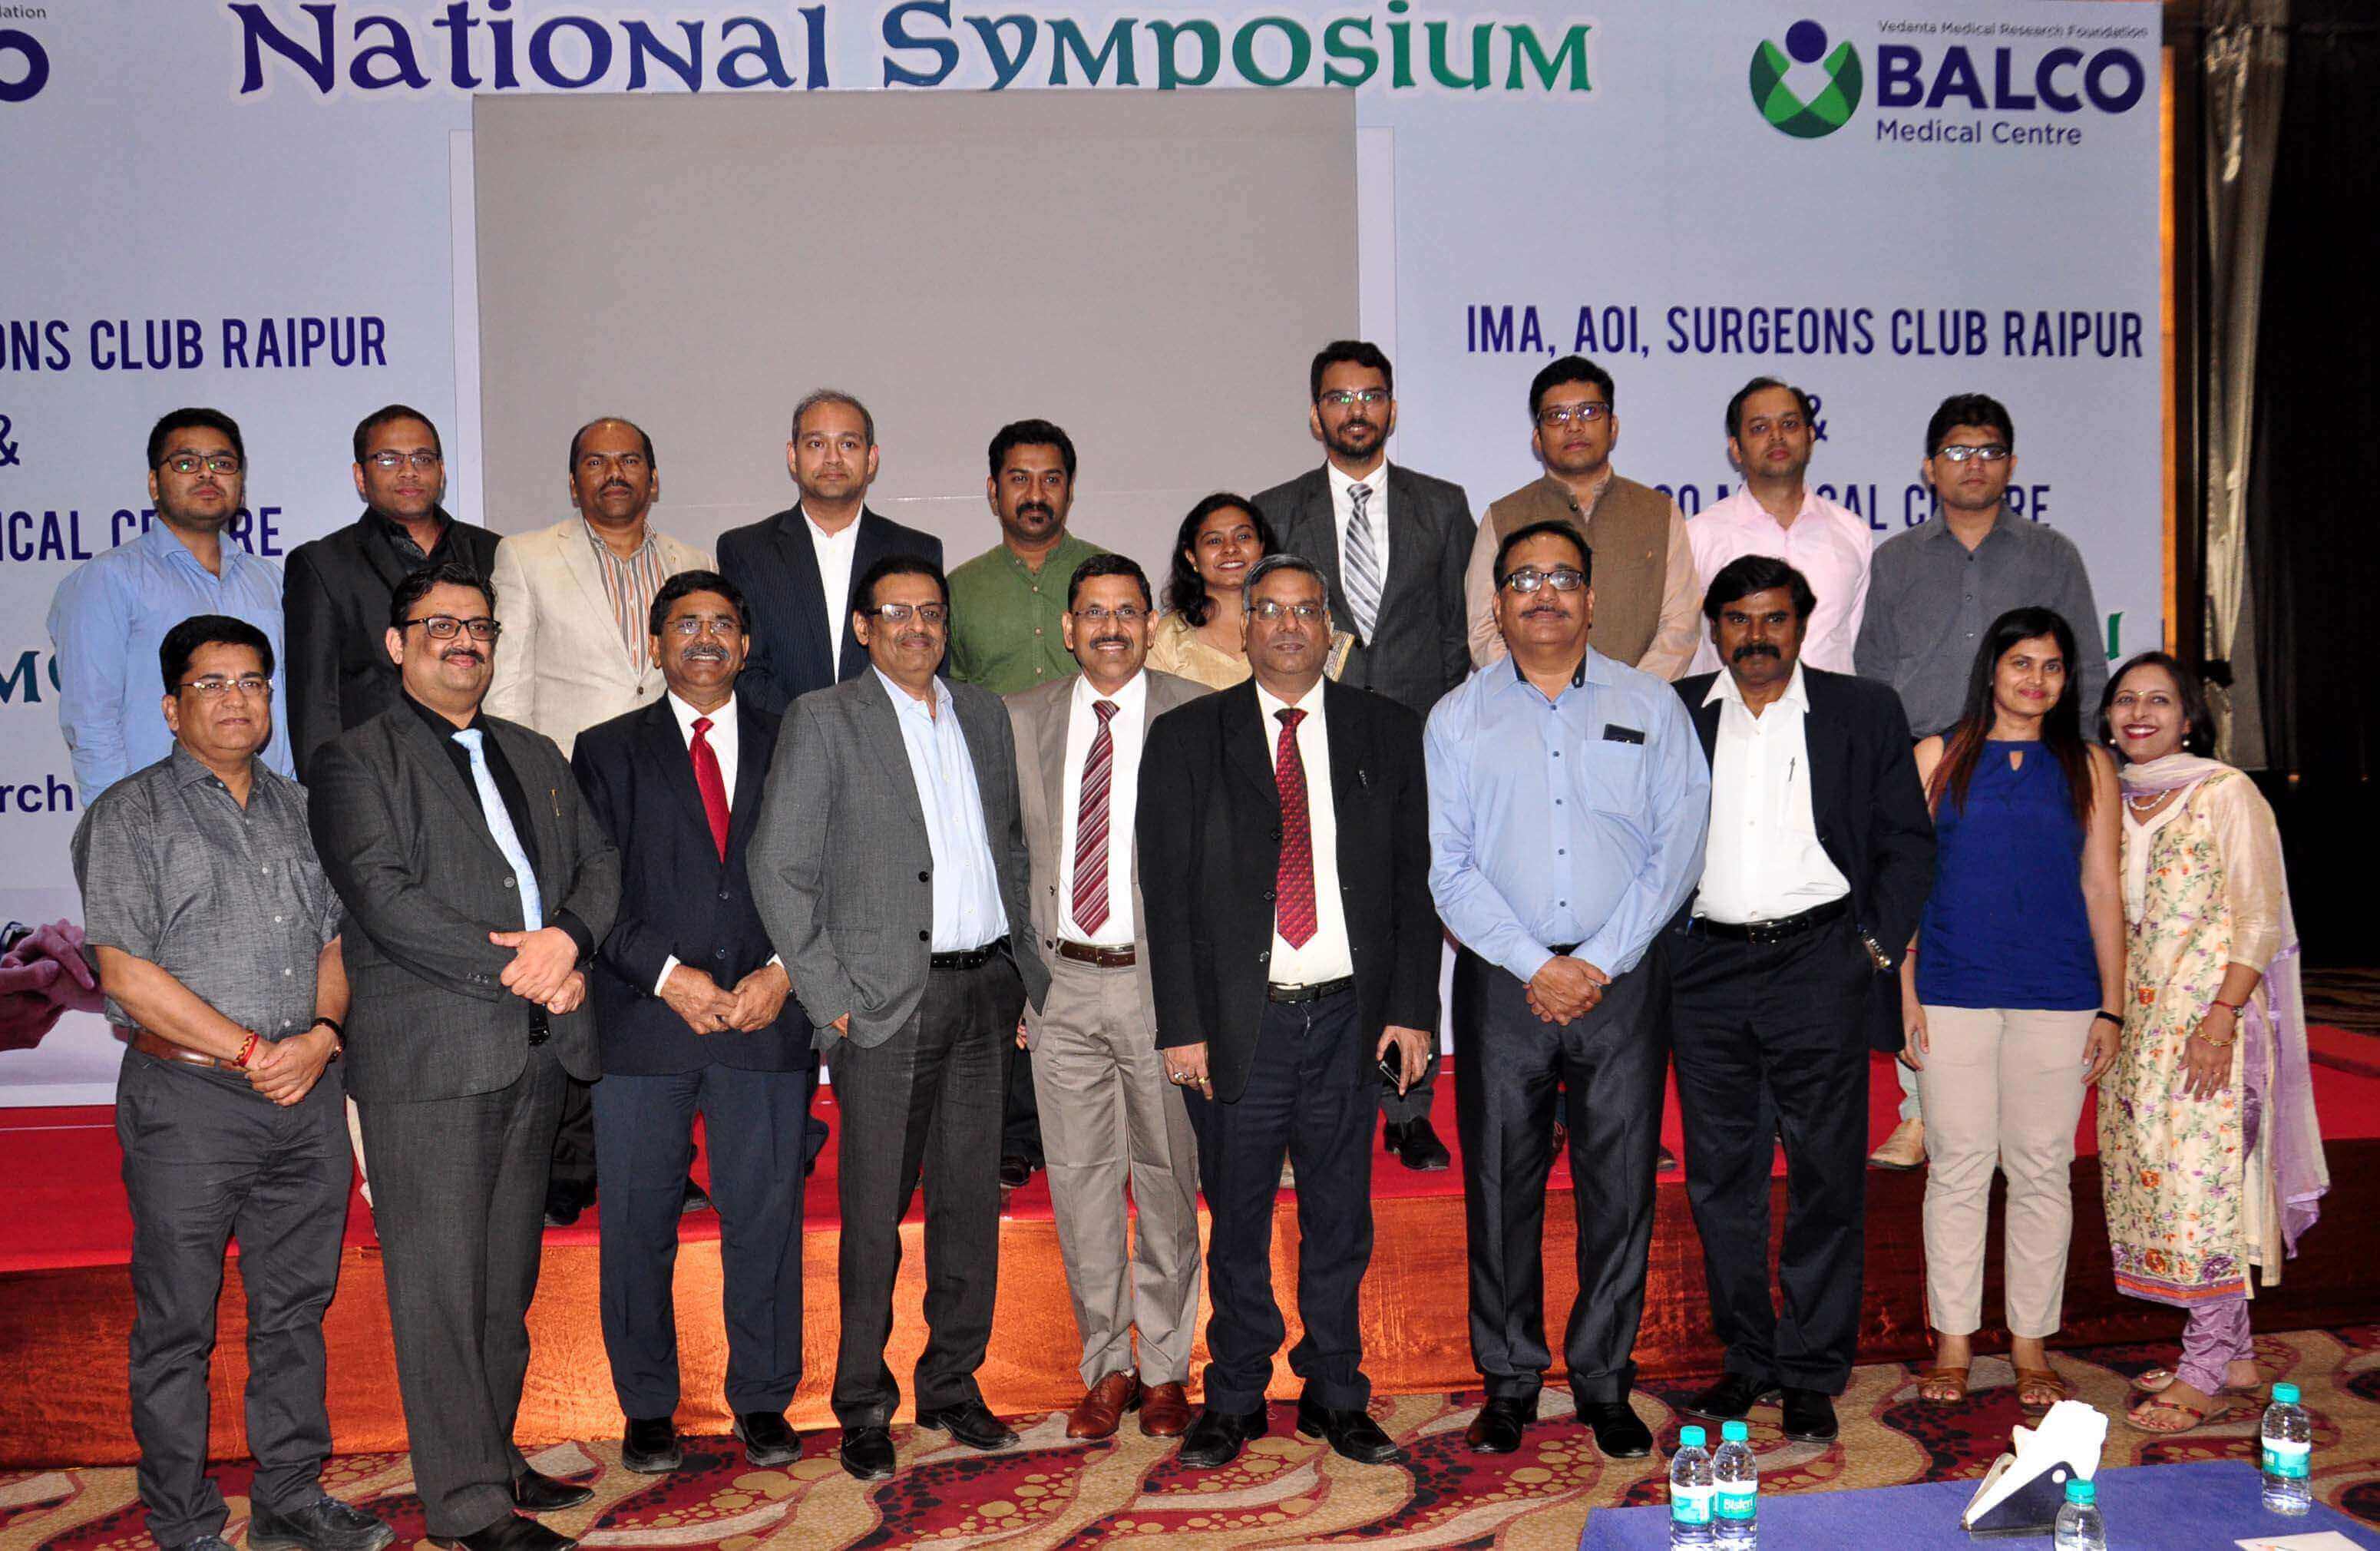 National Symposium